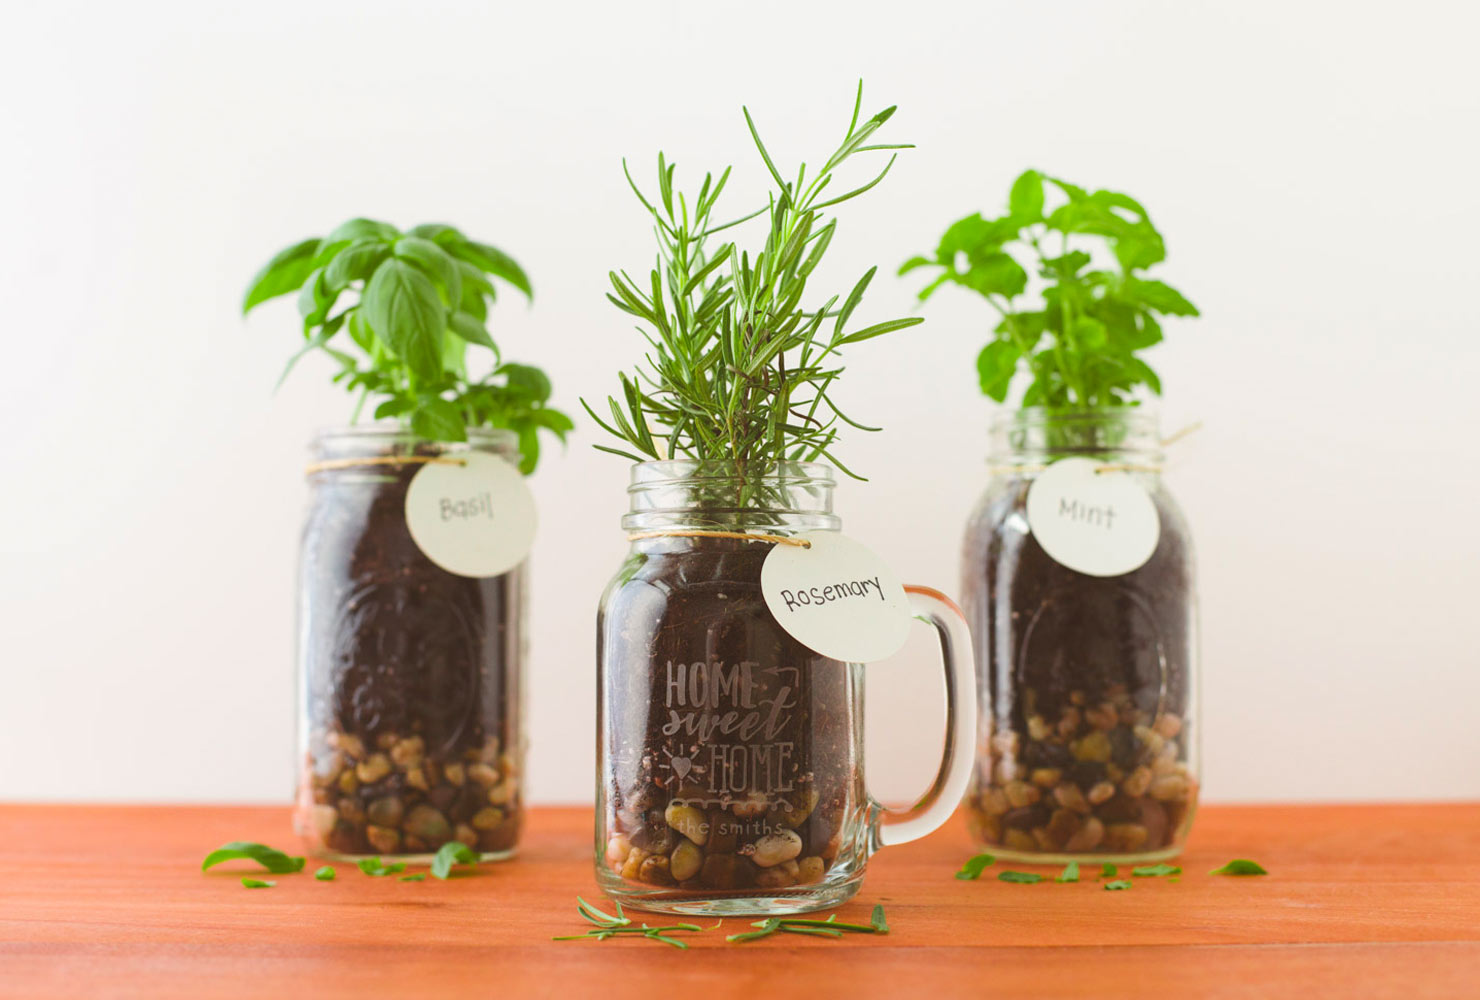 20 dollar gift ideas mason jar plants.